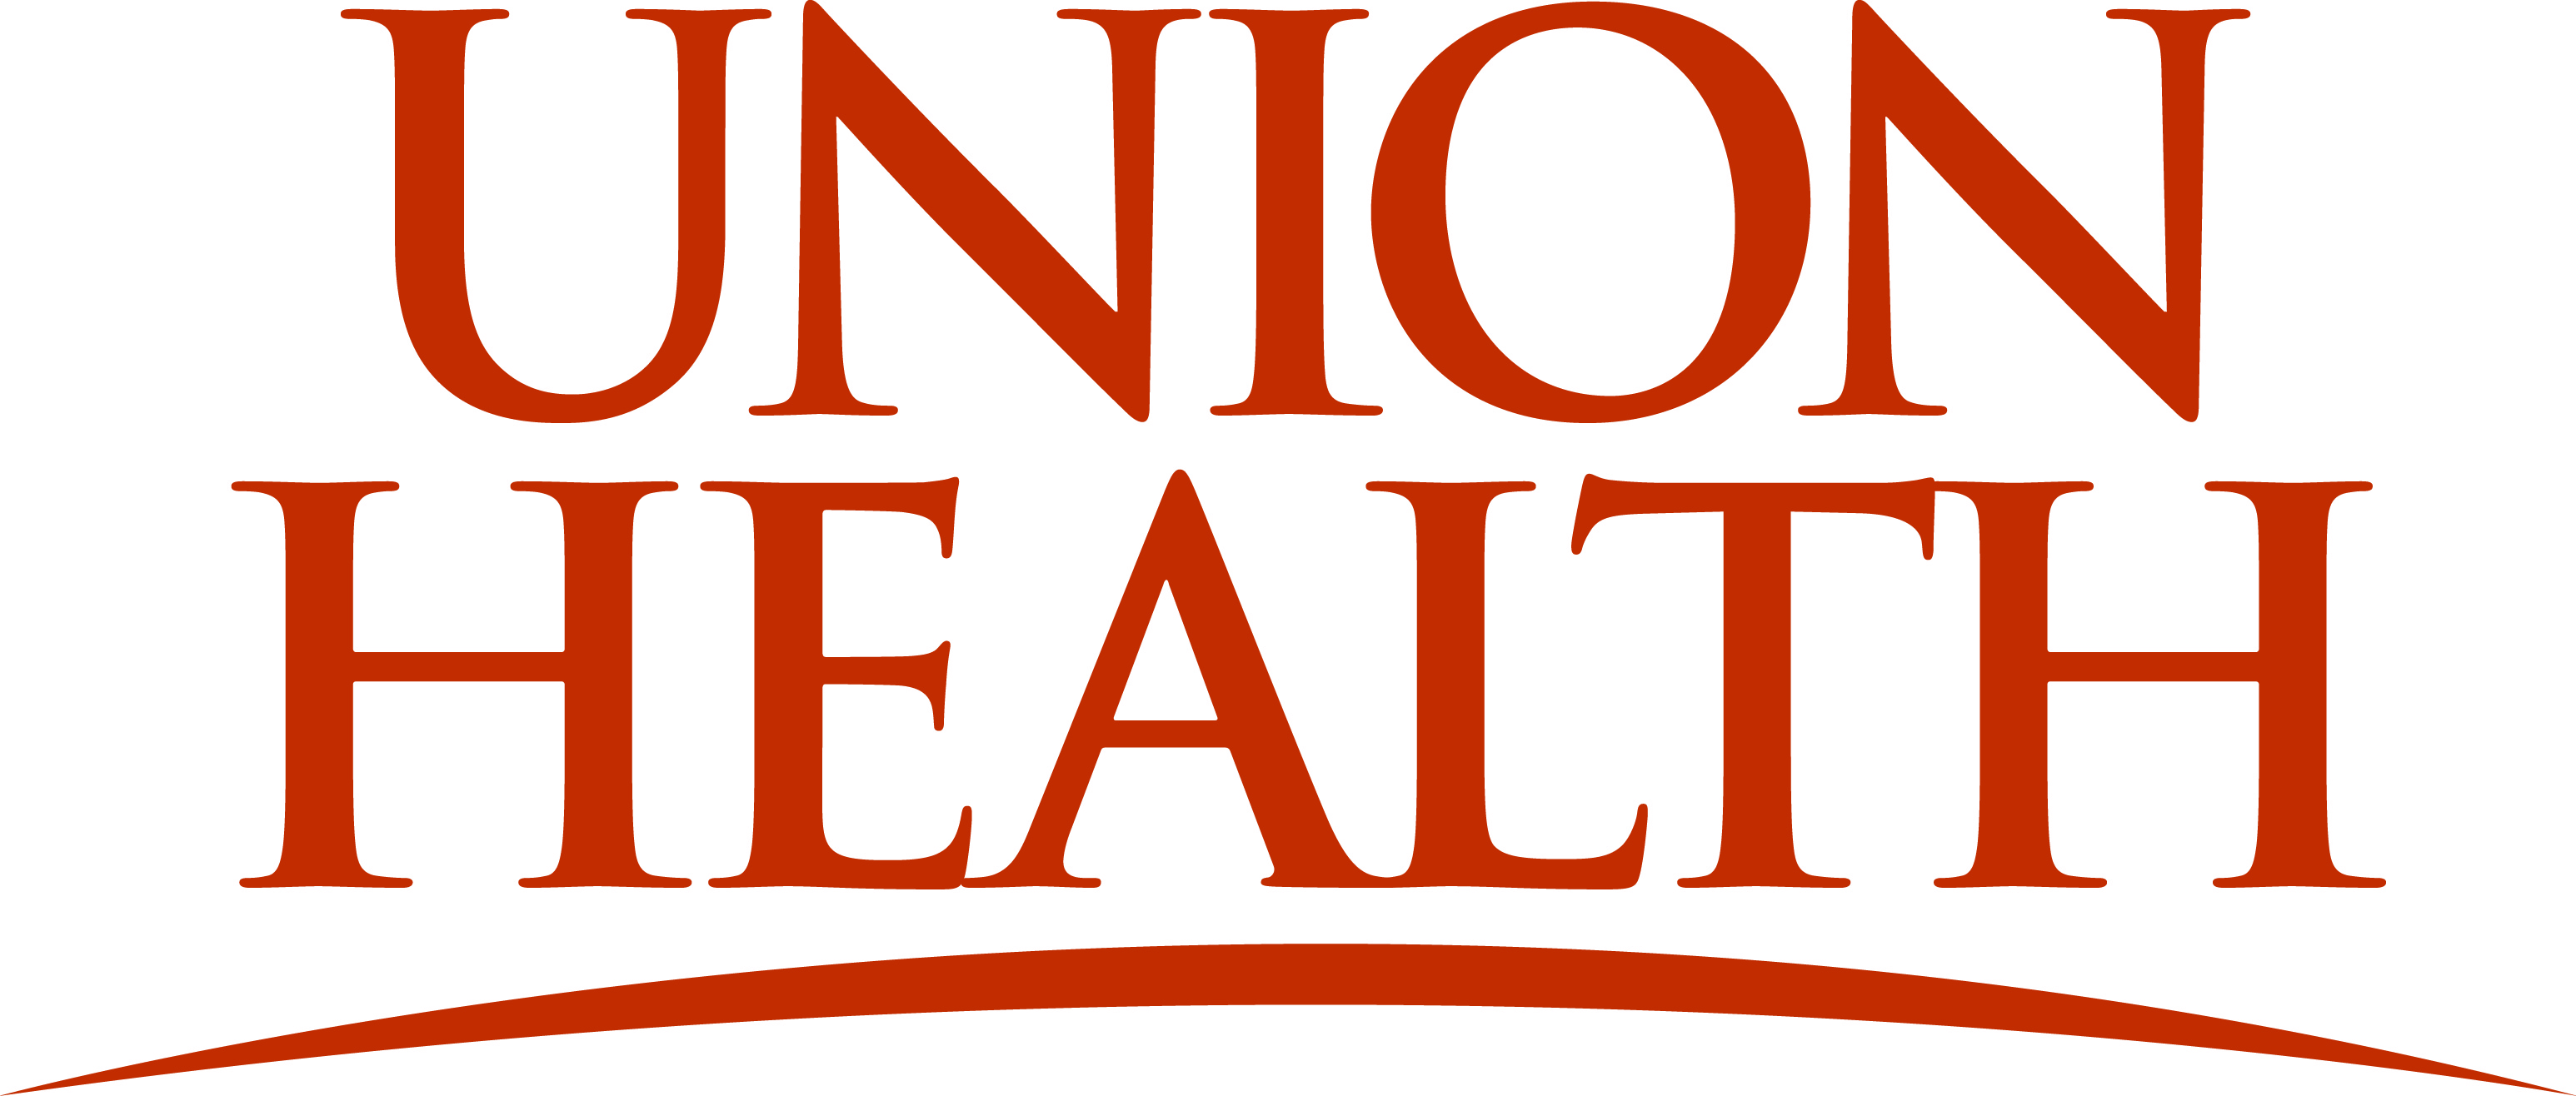 Union Health